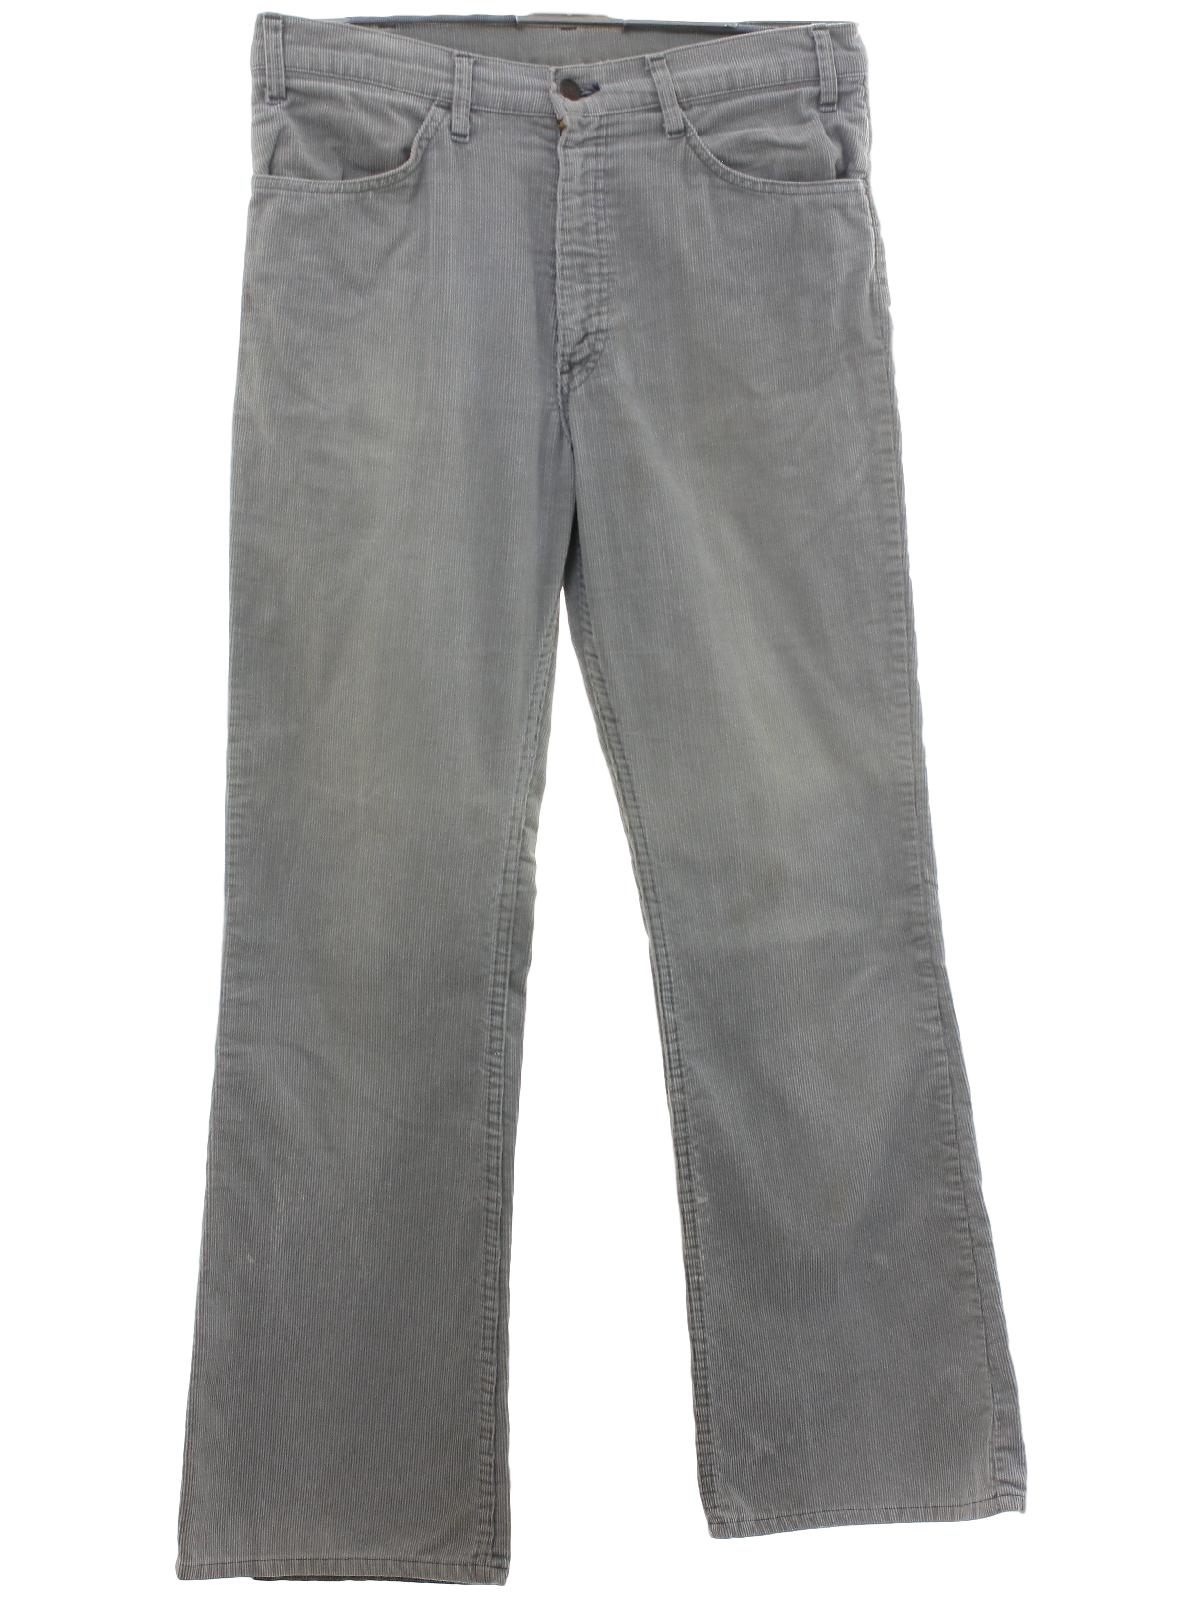 Vintage Levis 646 70's Bellbottom Pants: 70s -Levis 646- Mens